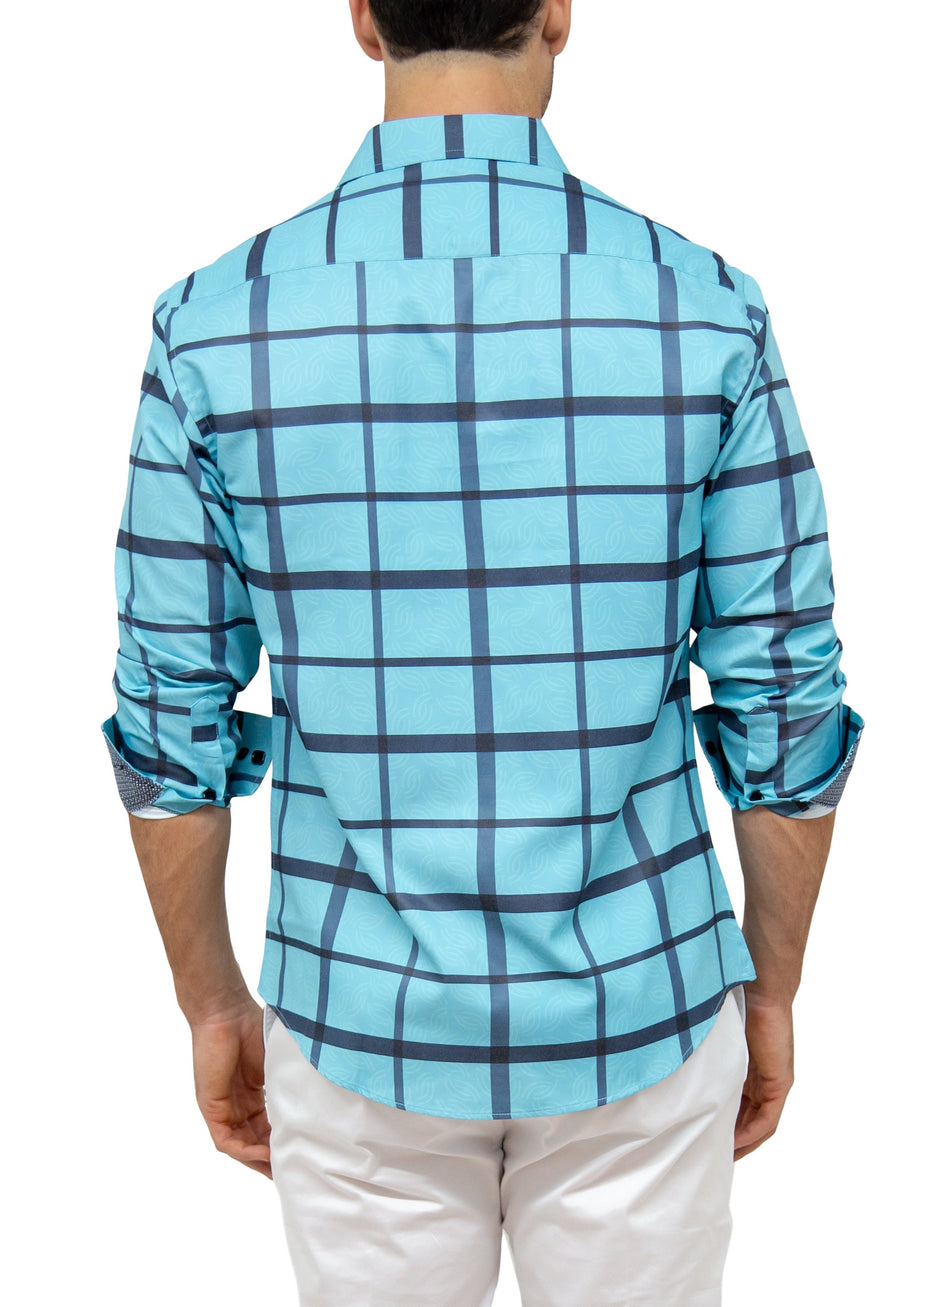 Turquoise Swirl Texture Windowpane Print Long Sleeve Button Up